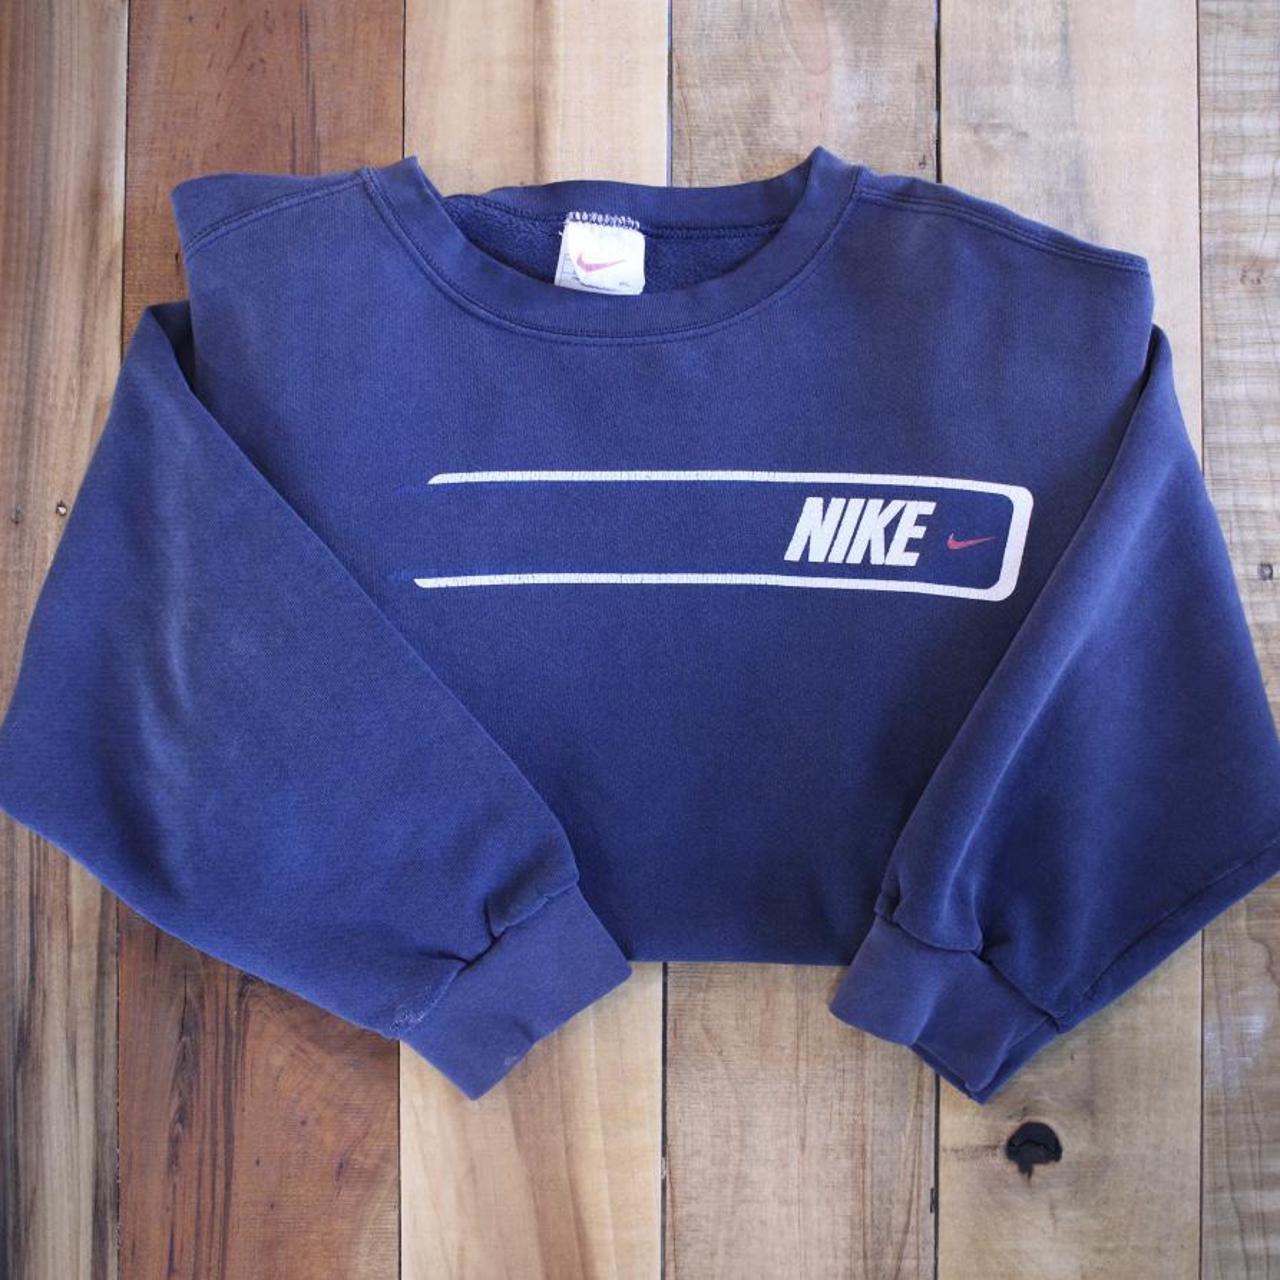 Product Image 1 - Vintage Nike Sweatshirt

Size XL

No major